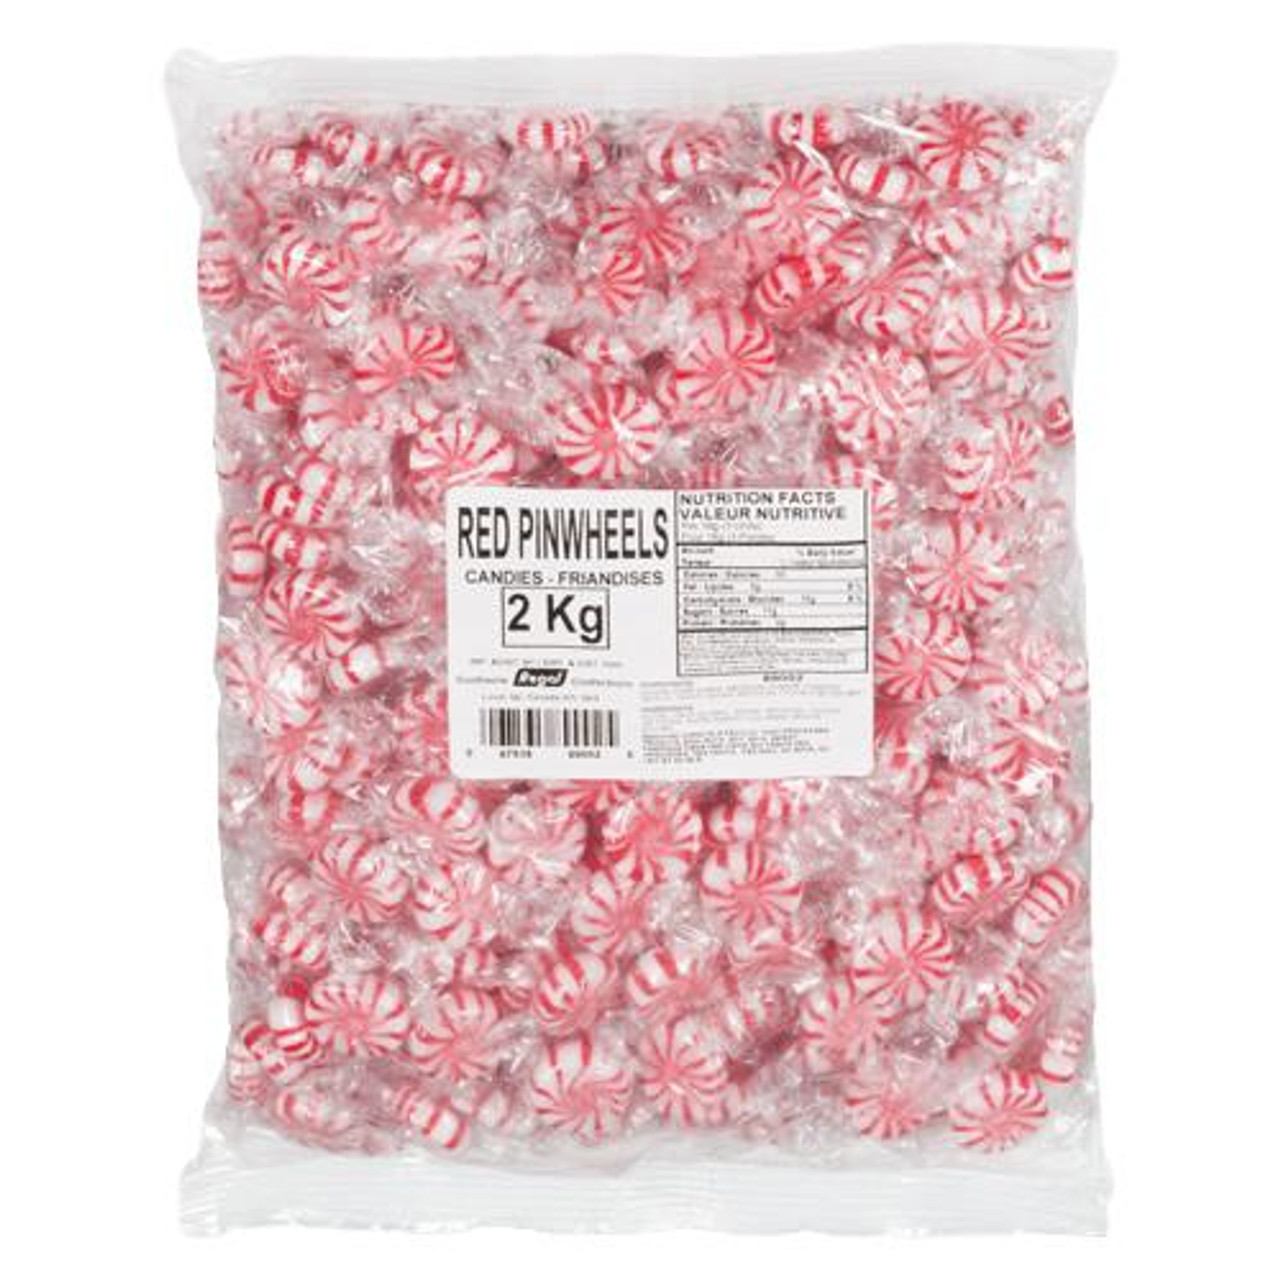  REGAL Pinwheel Mints 2kg/4.4lbs - Refreshing Minty Delight 